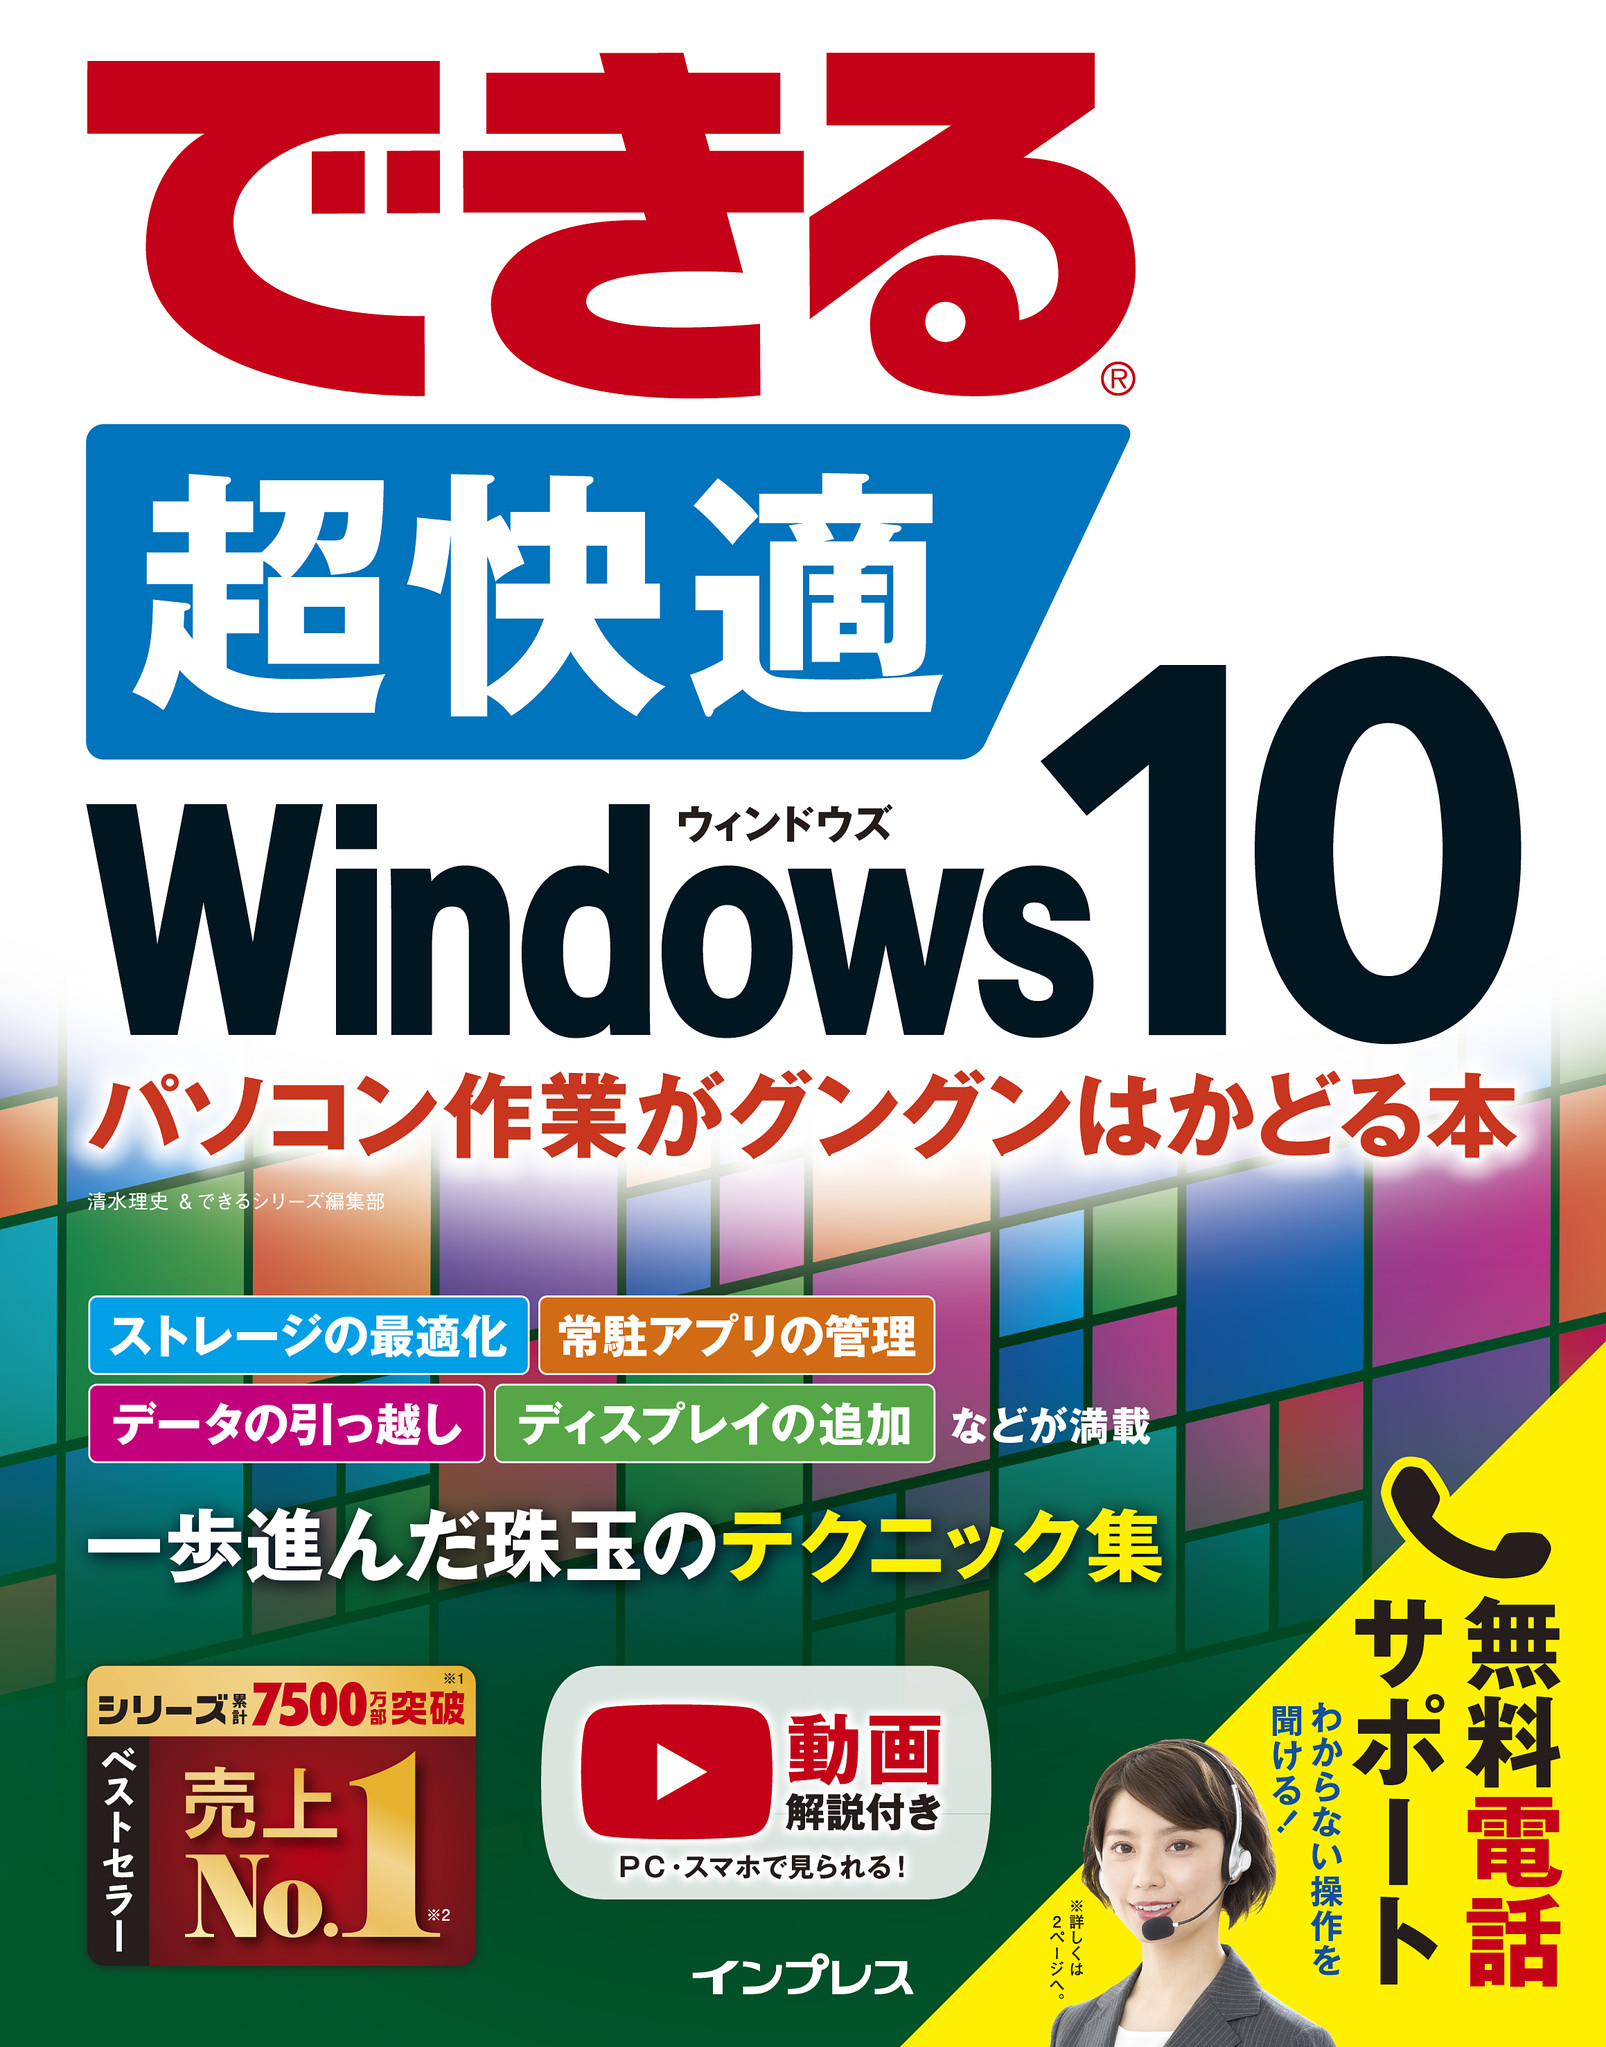 Windows 10を最適化 効率化するノウハウが満載の できる 超快適 Windows 10 パソコン 作業がグングンはかどる本 を6月26日に発売 株式会社インプレスホールディングスのプレスリリース